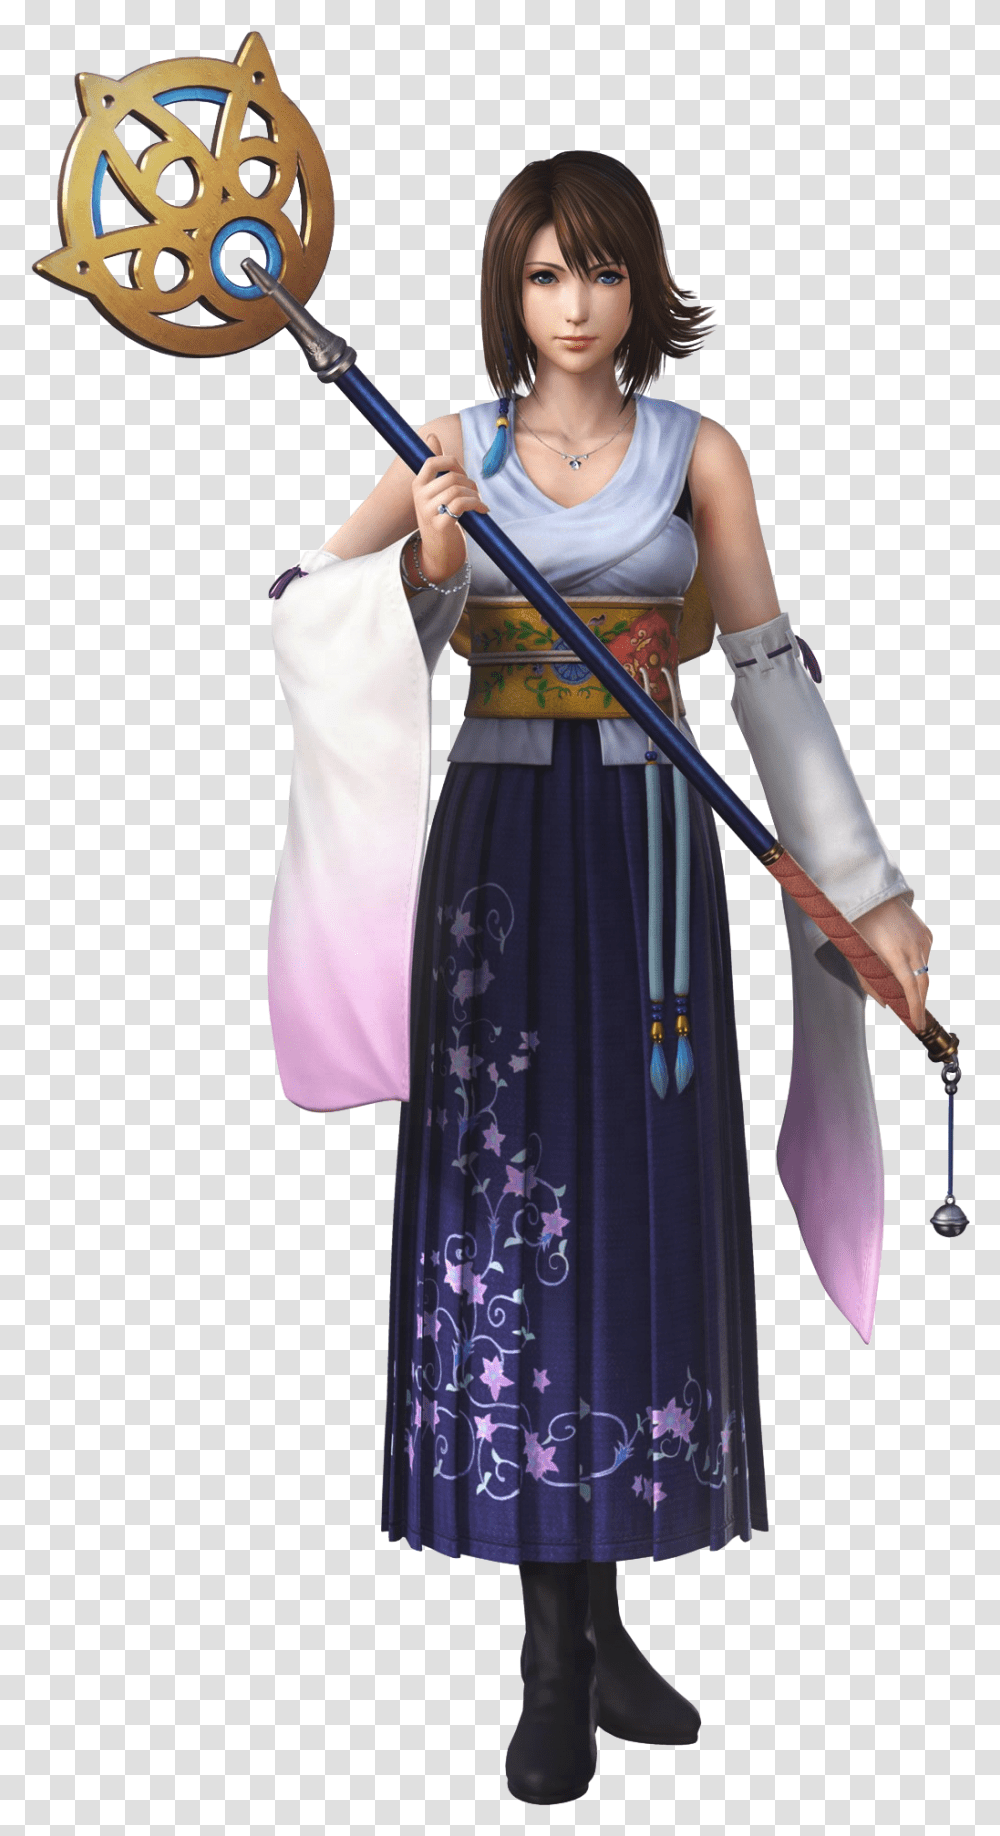 Dffnt Ffx Yuna Dissidia Final Fantasy Nt Yuna, Costume, Person, Female Transparent Png